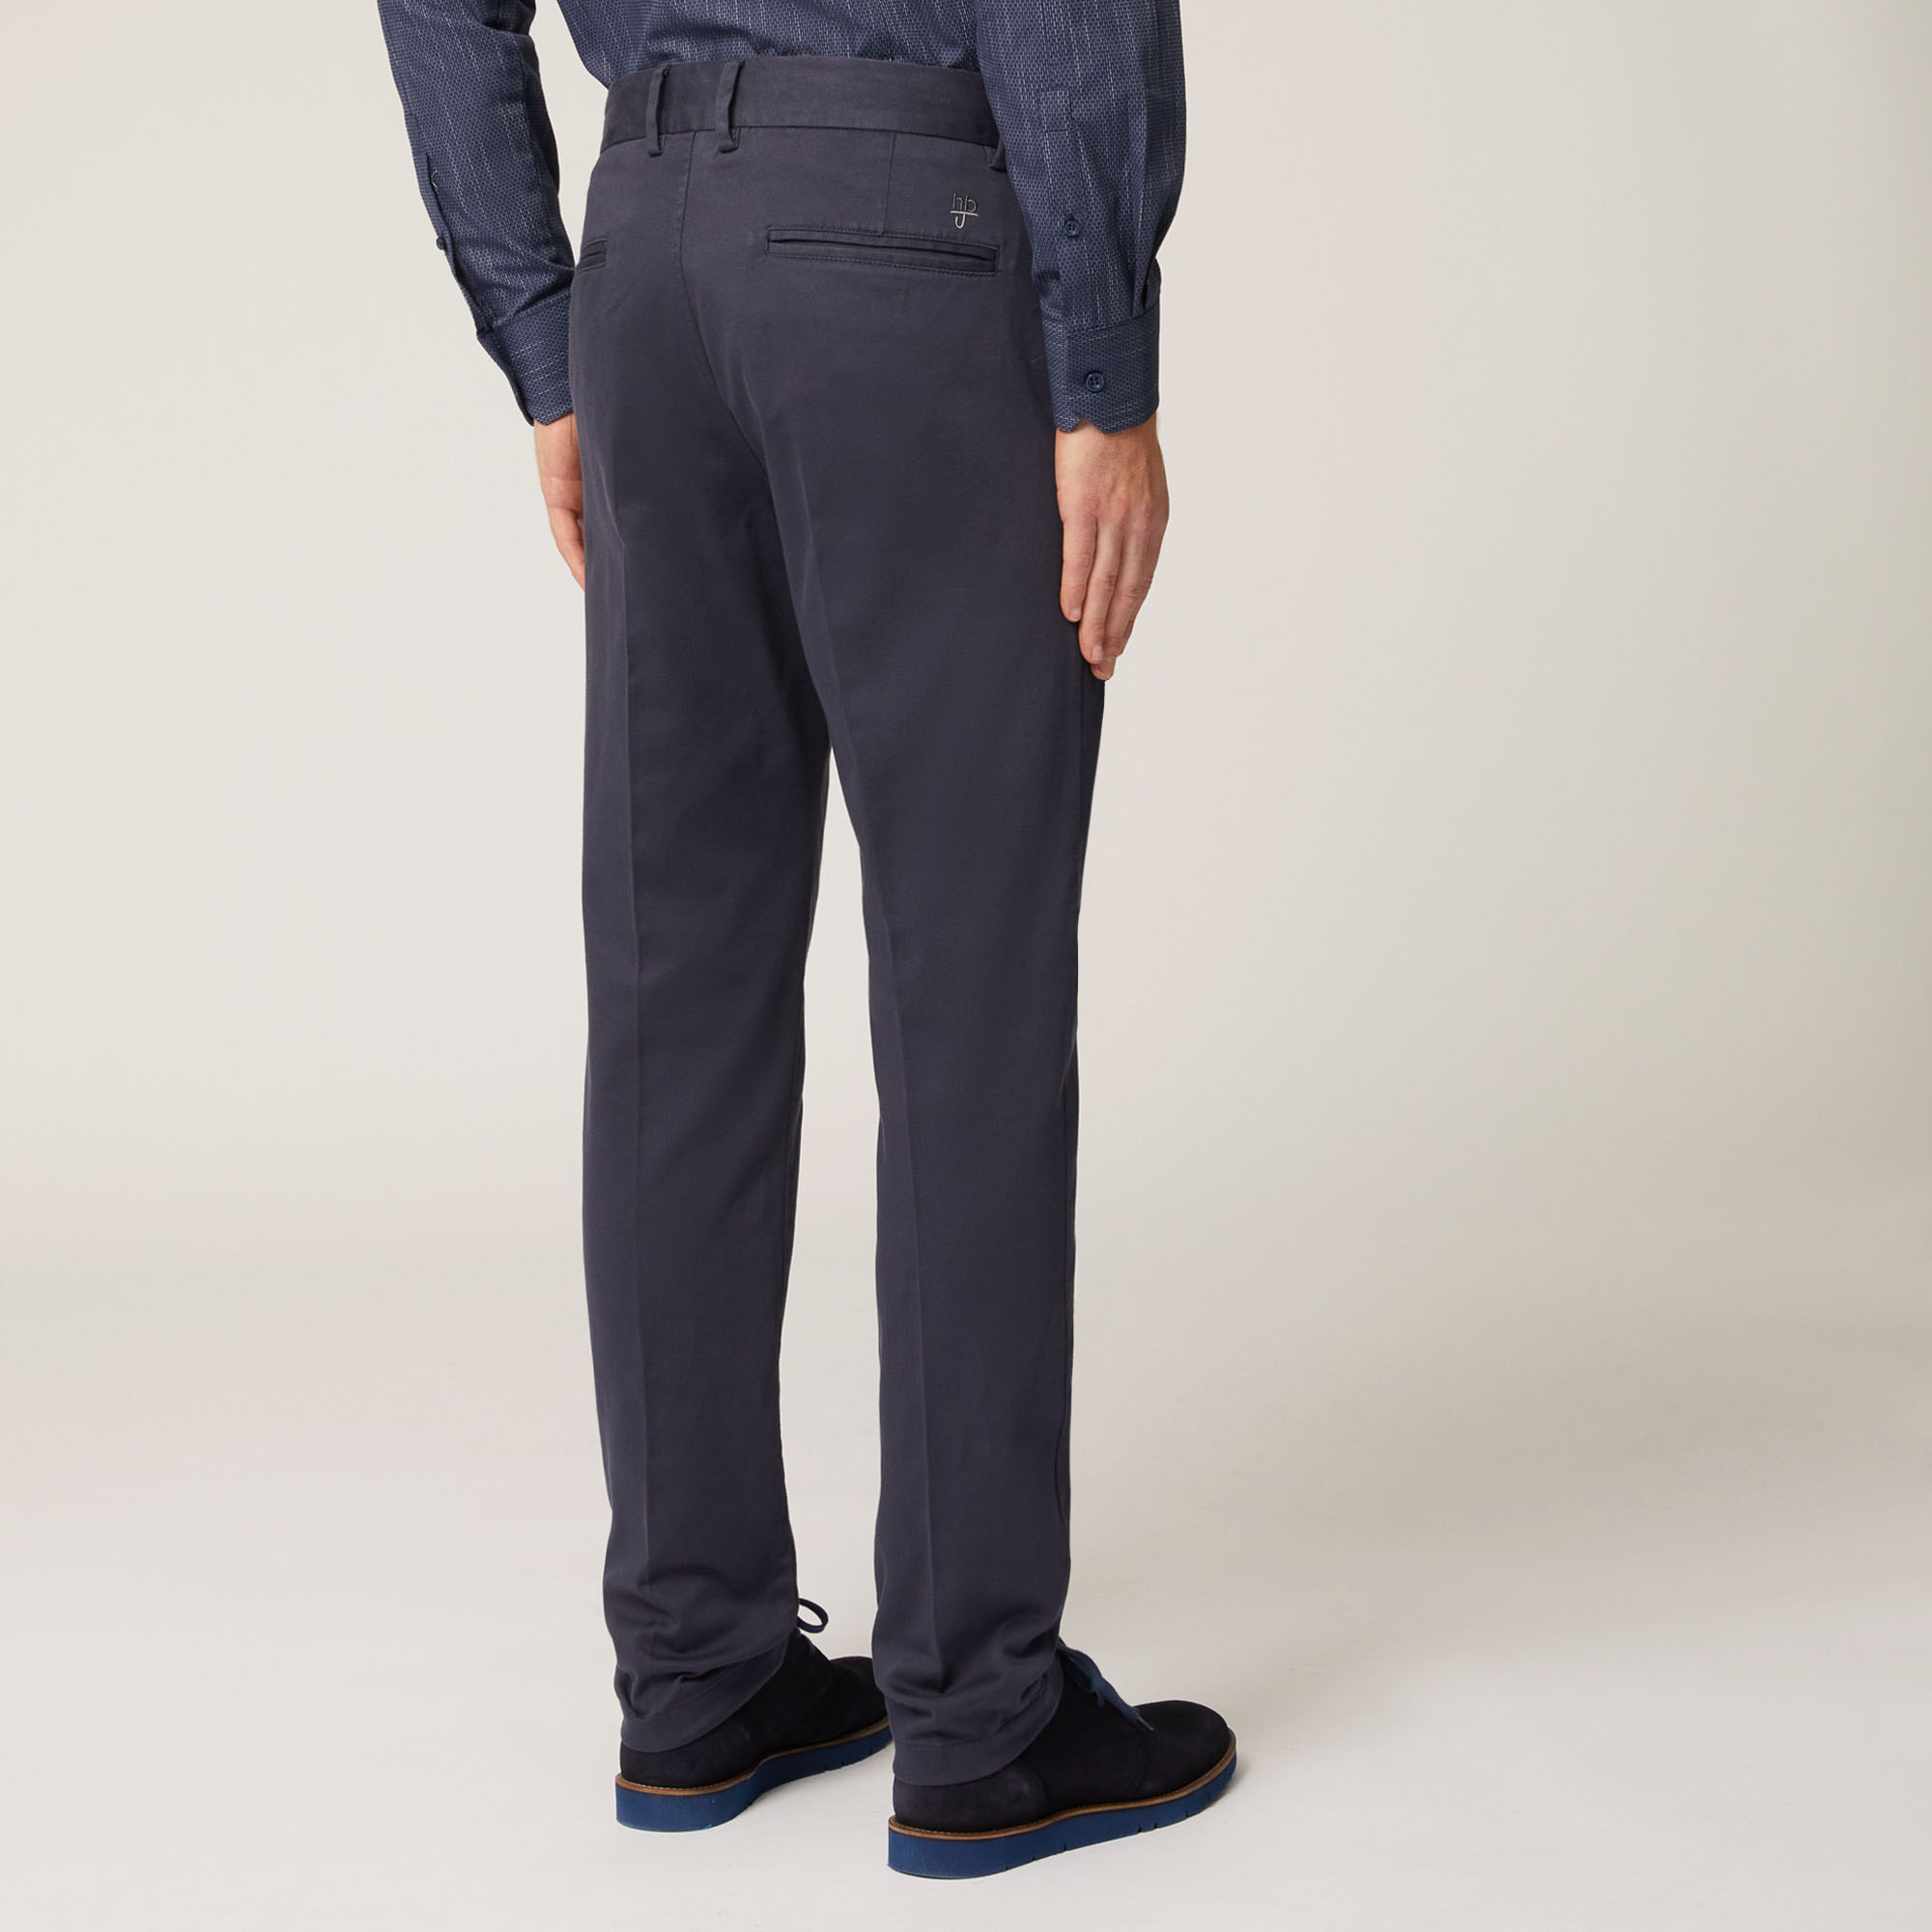 Pantalone Chino Narrow In Cotone Armaturato, Light Blue, large